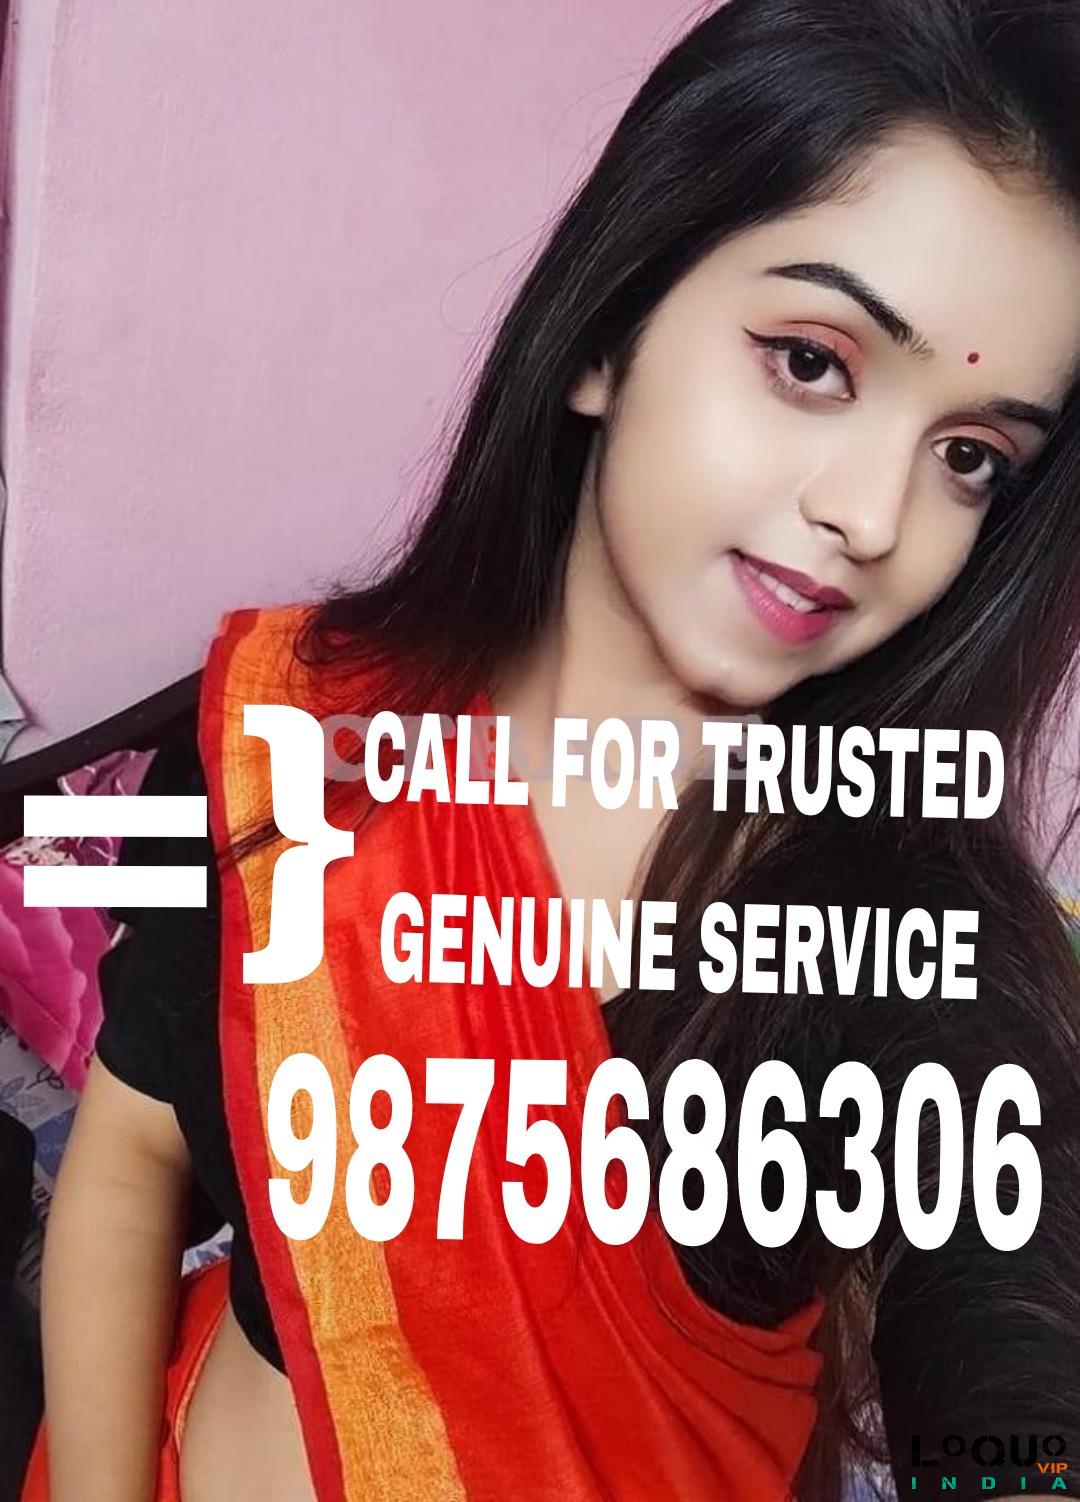 Call Girls Uttarakhand: ROORKEE ❤CALL GIRL 98756*86306 ❤CALL GIRLS IN ESCORT SERVICE❤